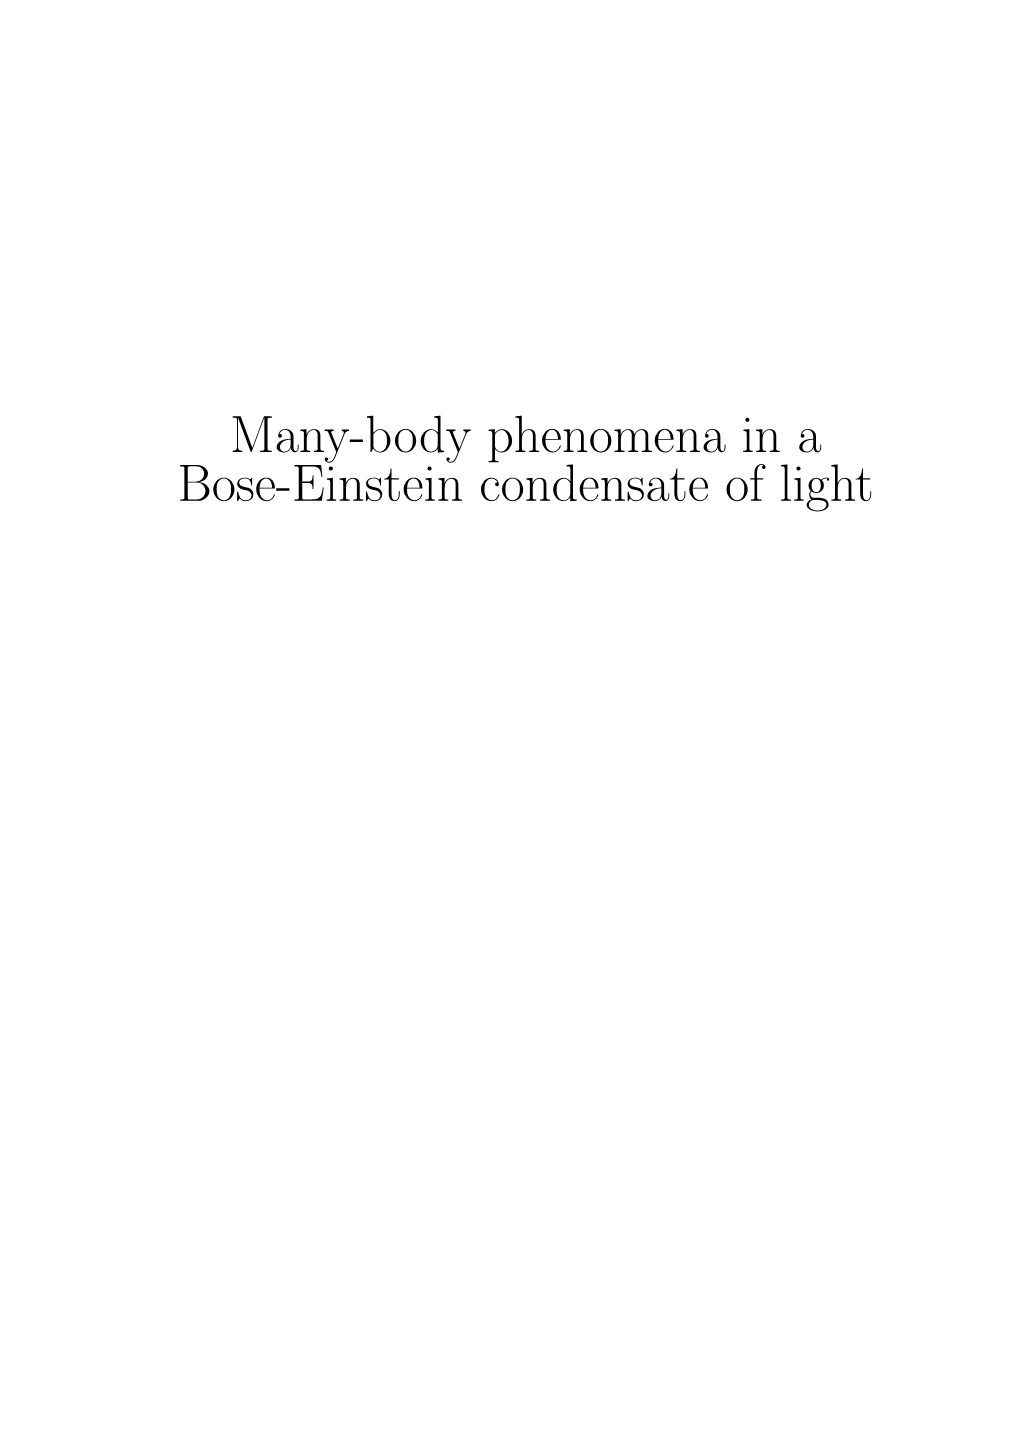 Many-Body Phenomena in a Bose-Einstein Condensate of Light